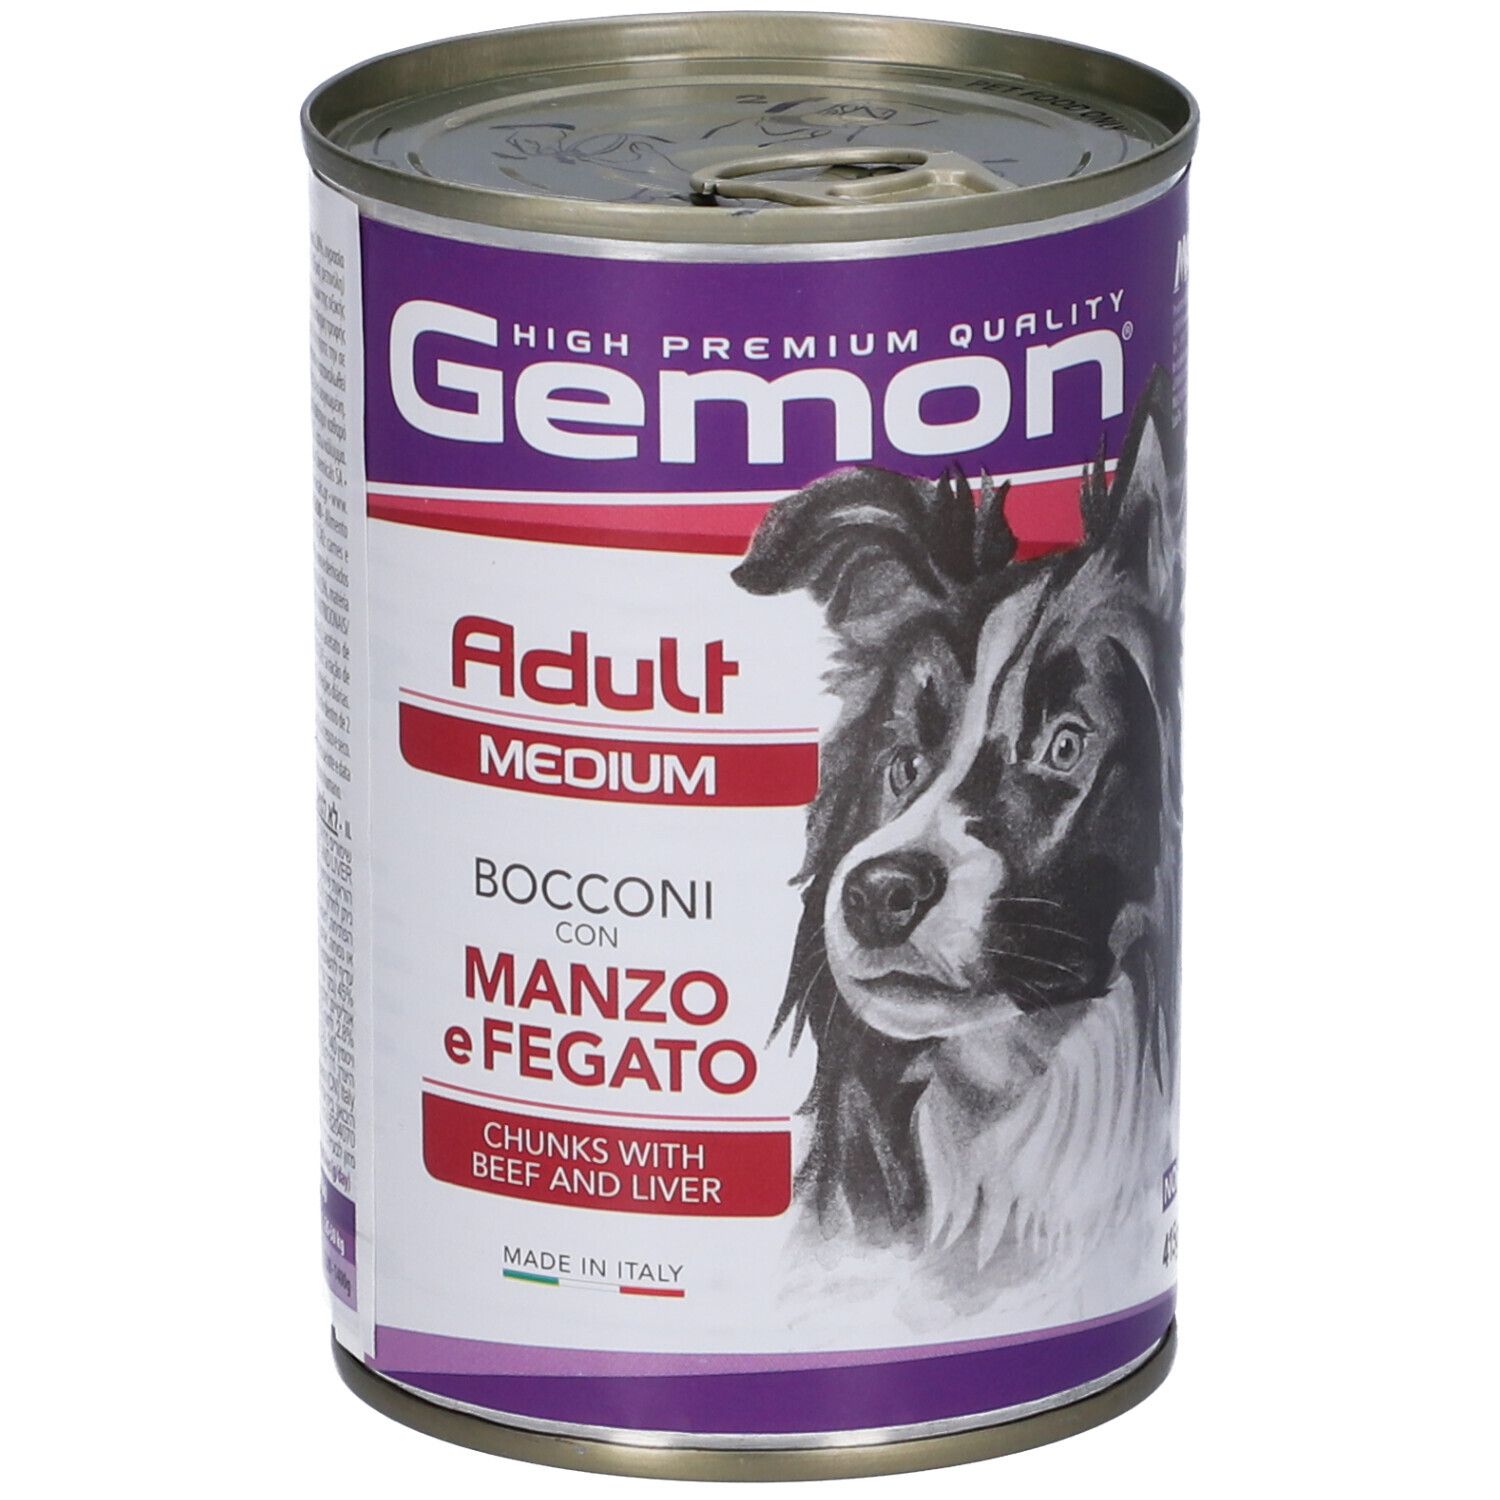 Image of Gemon Adult Medium Bocconi Manzo Fegato